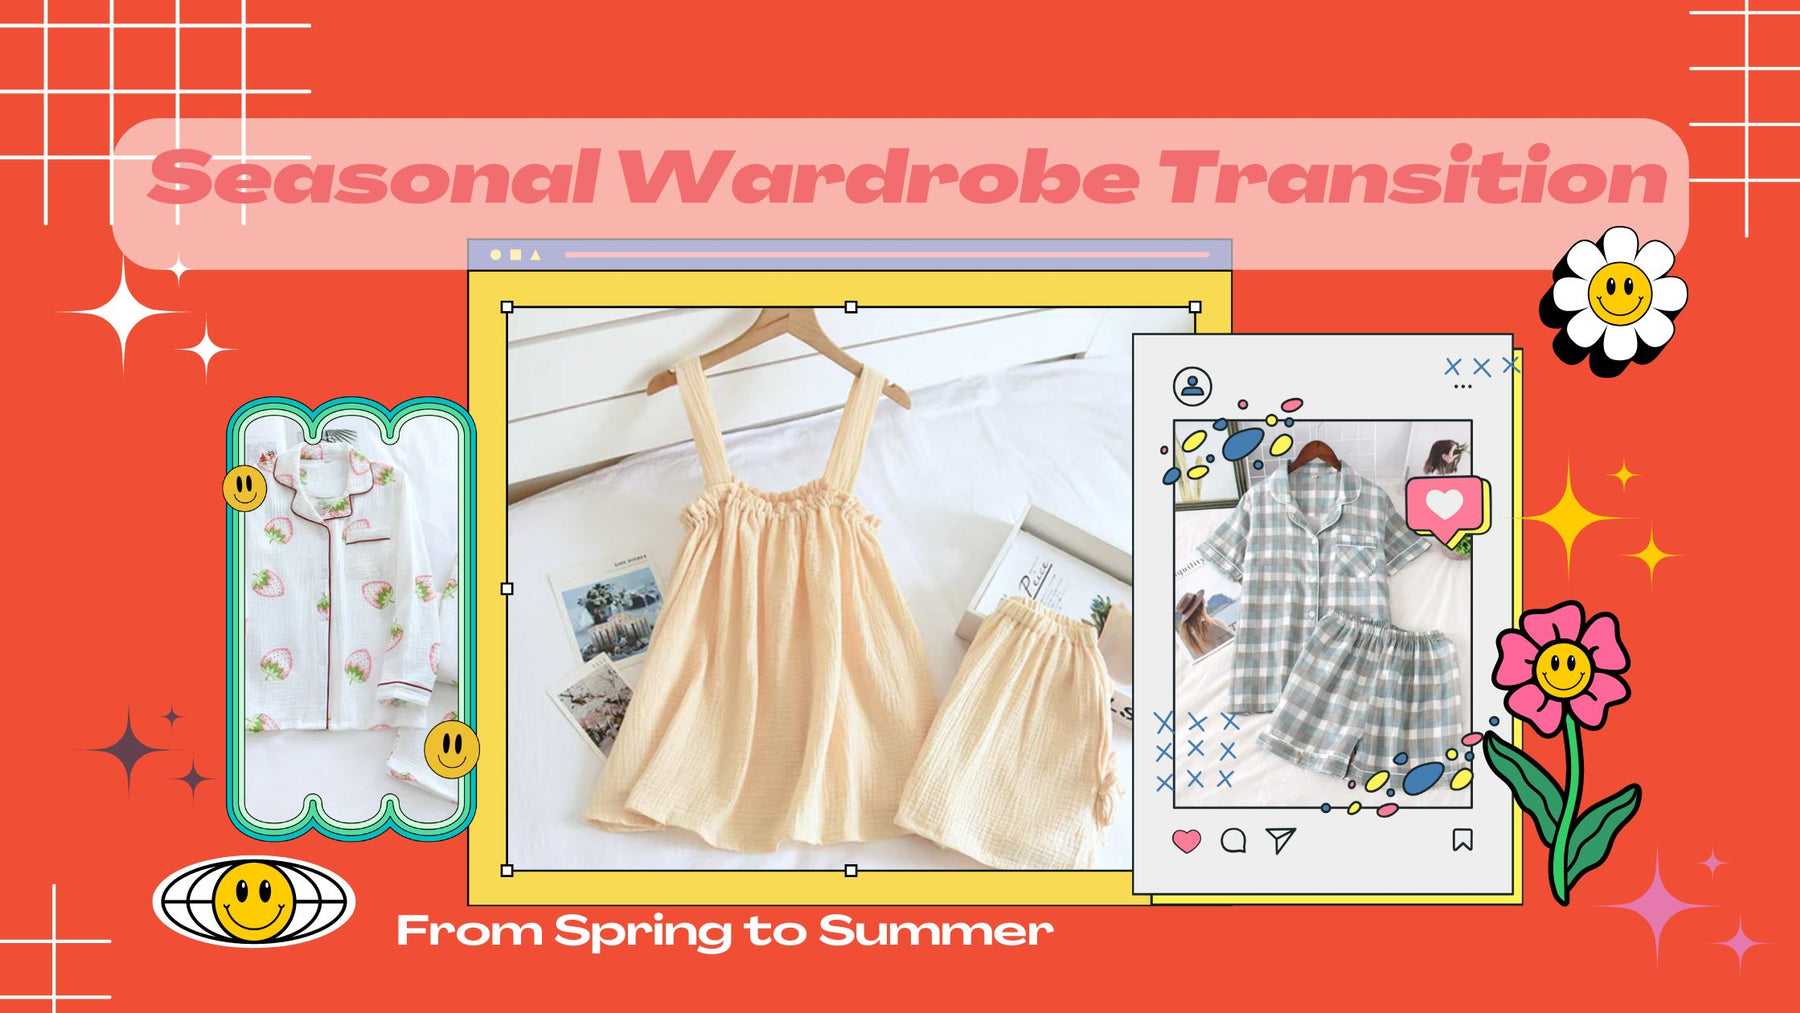 Seasonal Wardrobe Transition: From Spring to Summer